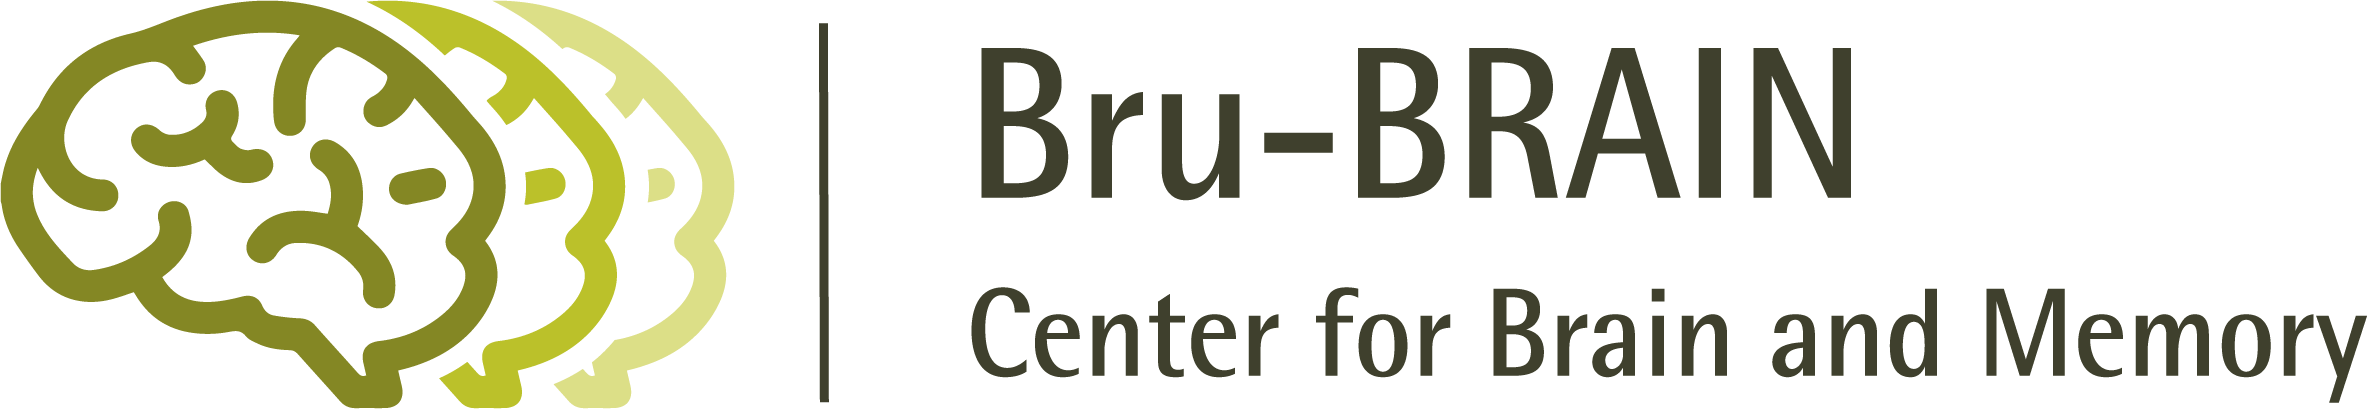 UZ Brussel logo